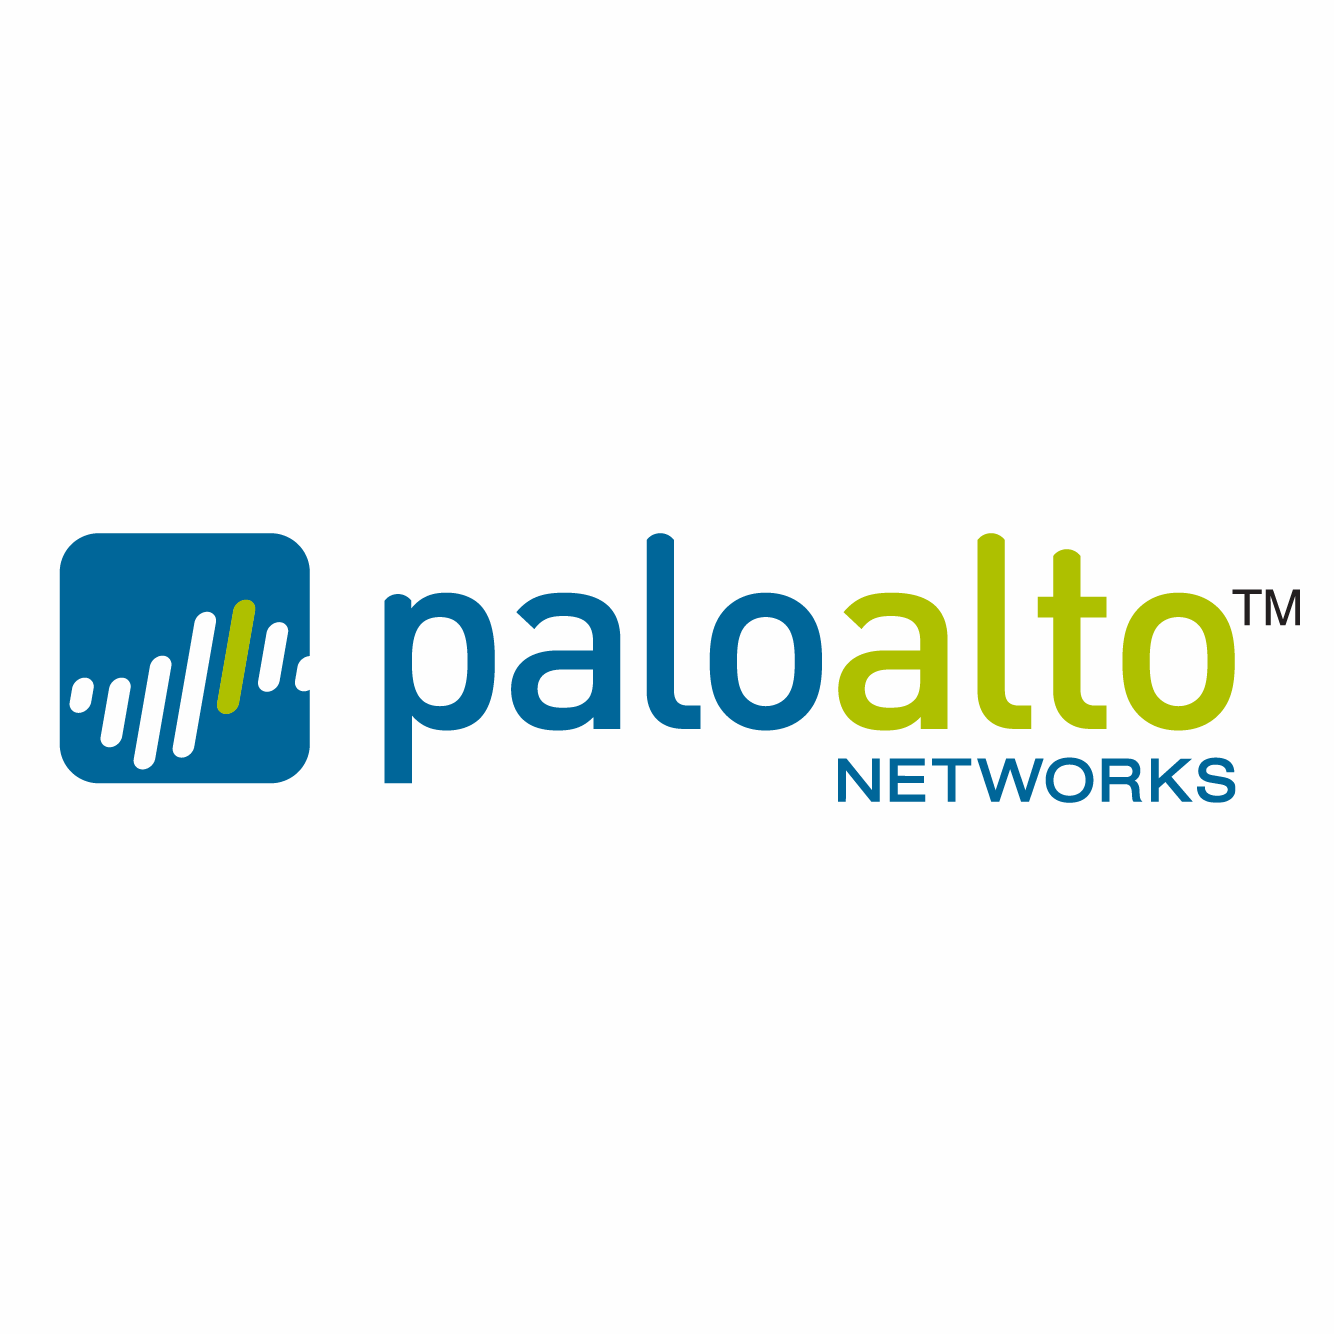 https://securetech.ae/wp-content/uploads/2019/02/15.PALOALTONWS.png